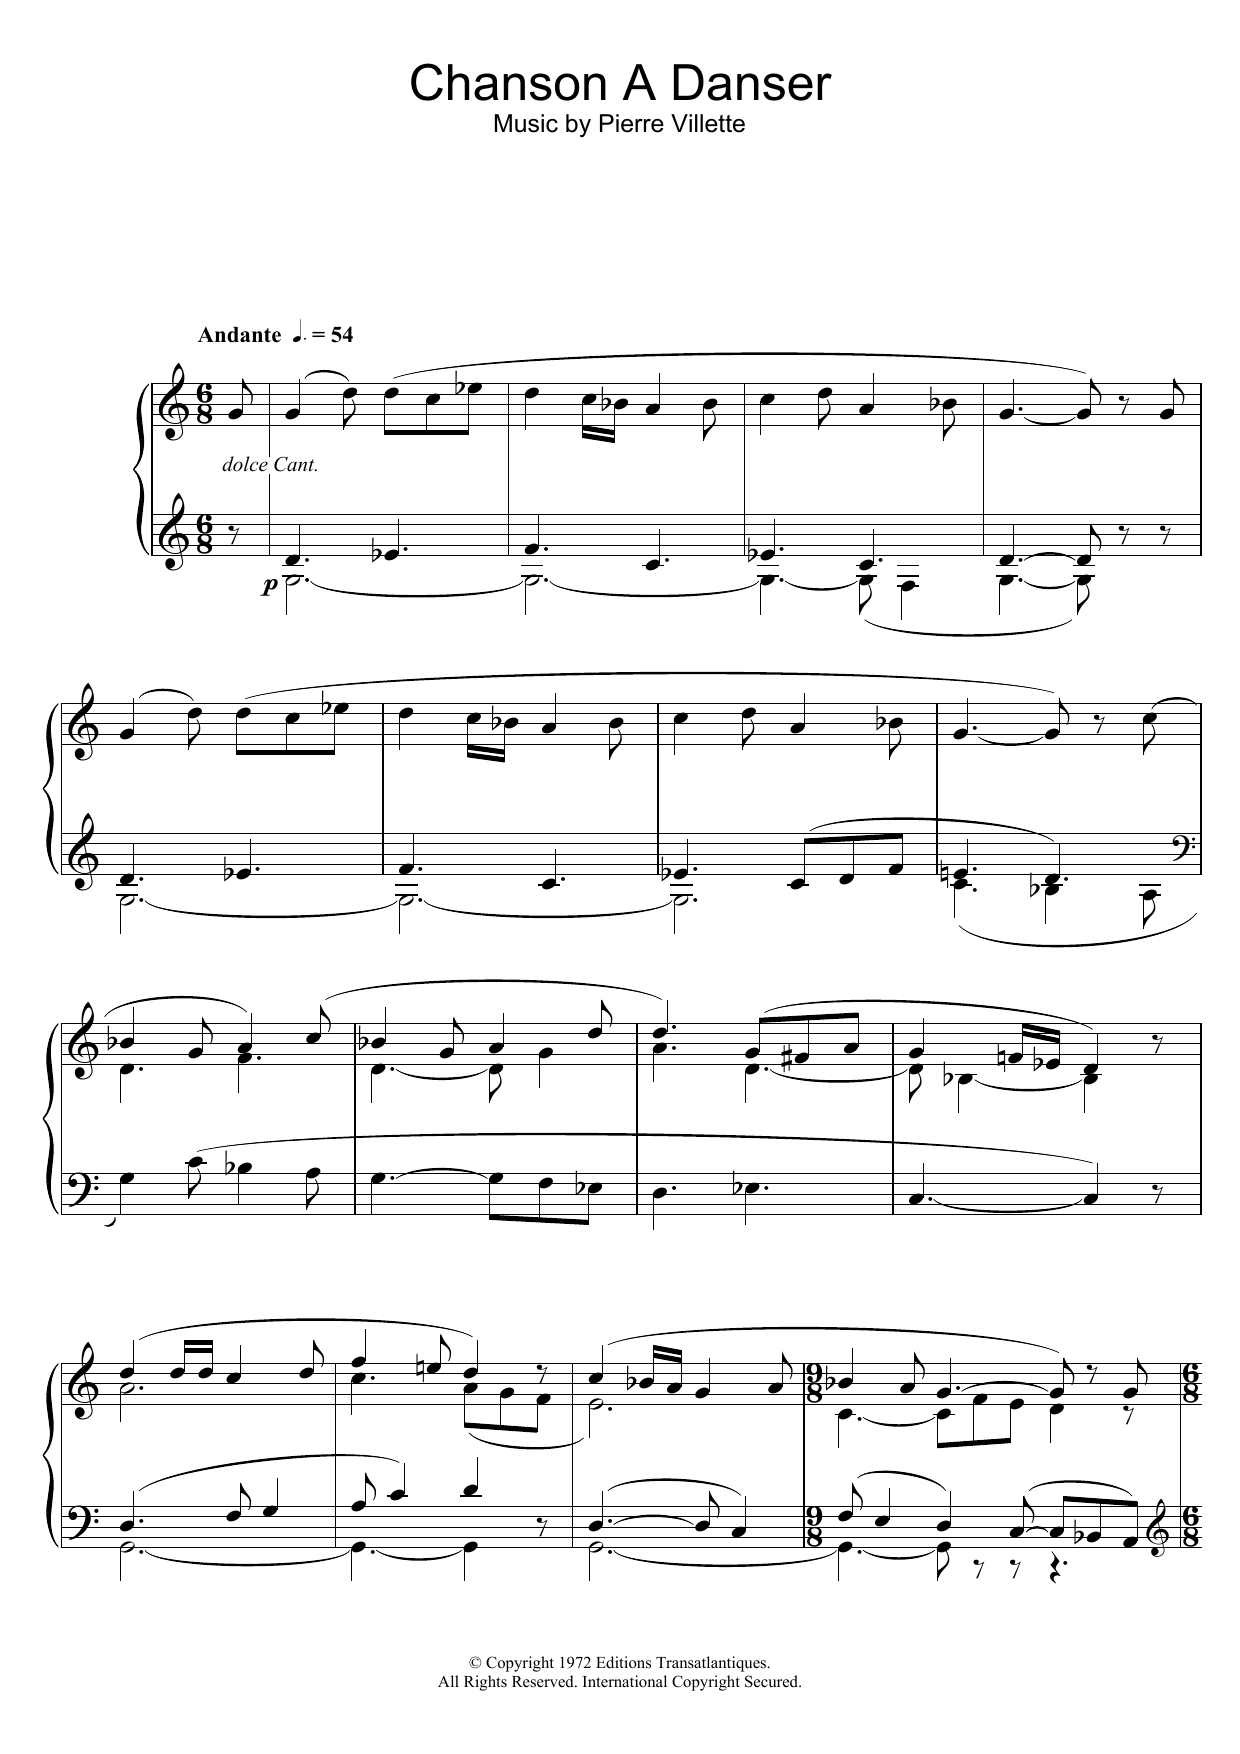 Daniel-Lesur J.Y Chanson A Danser Sheet Music Notes & Chords for Piano - Download or Print PDF